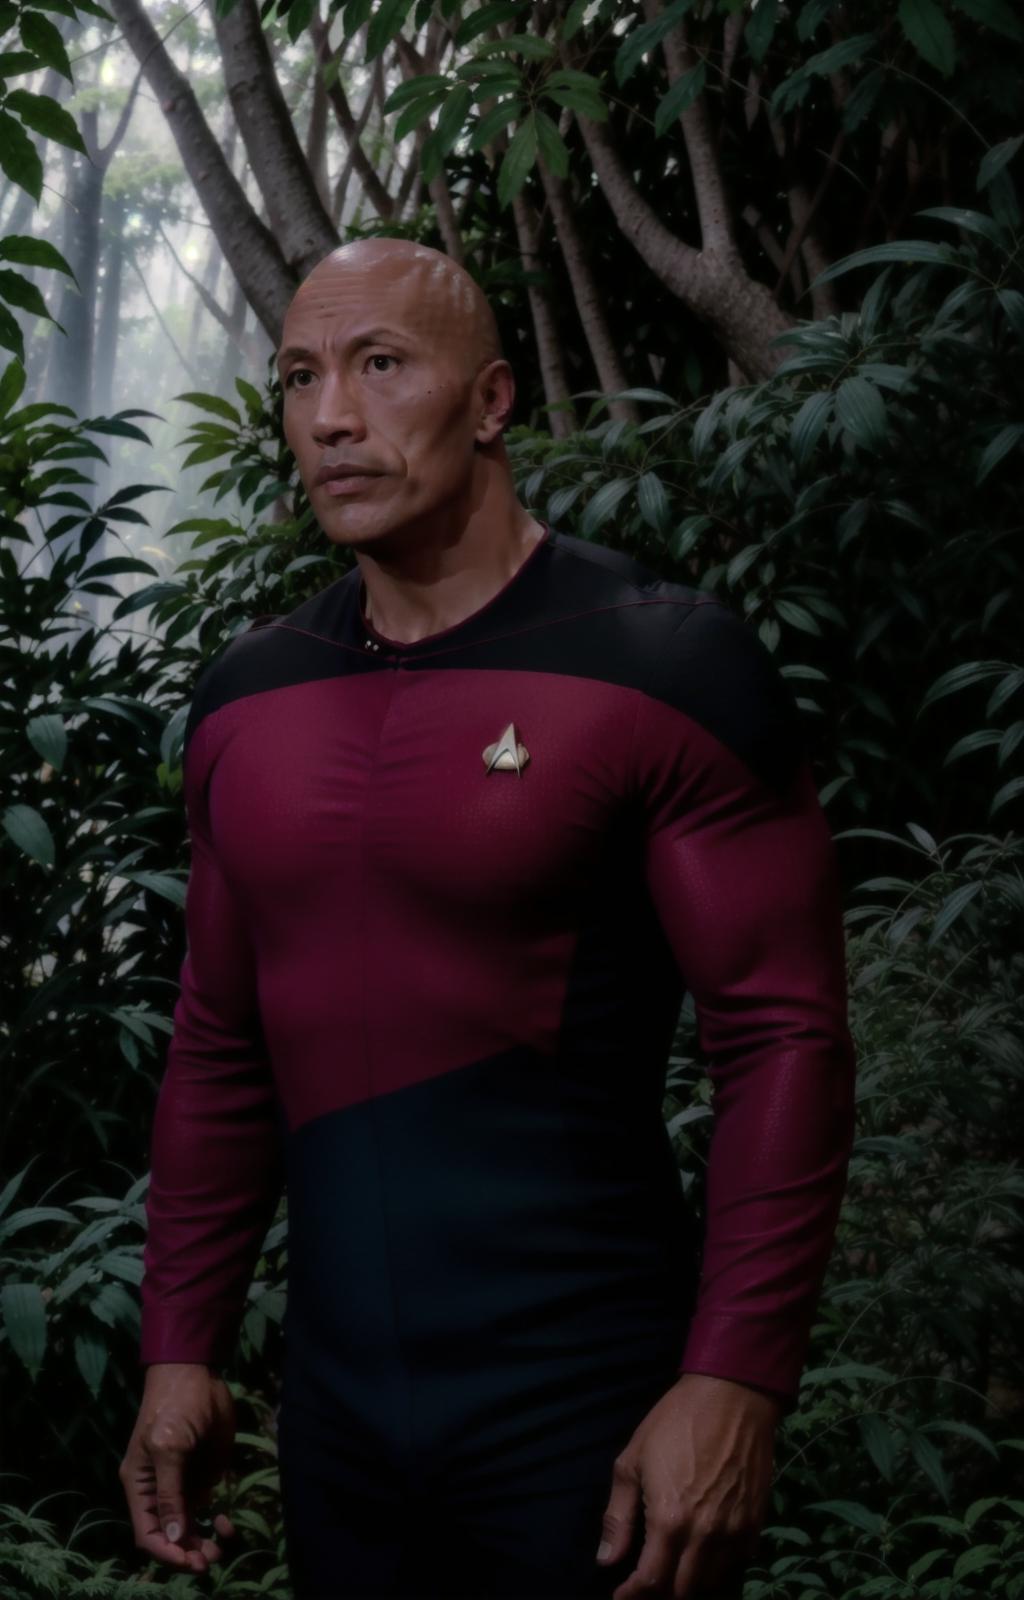 The Delta Force's Dwayne Johnson in a Star Trek Uniform.